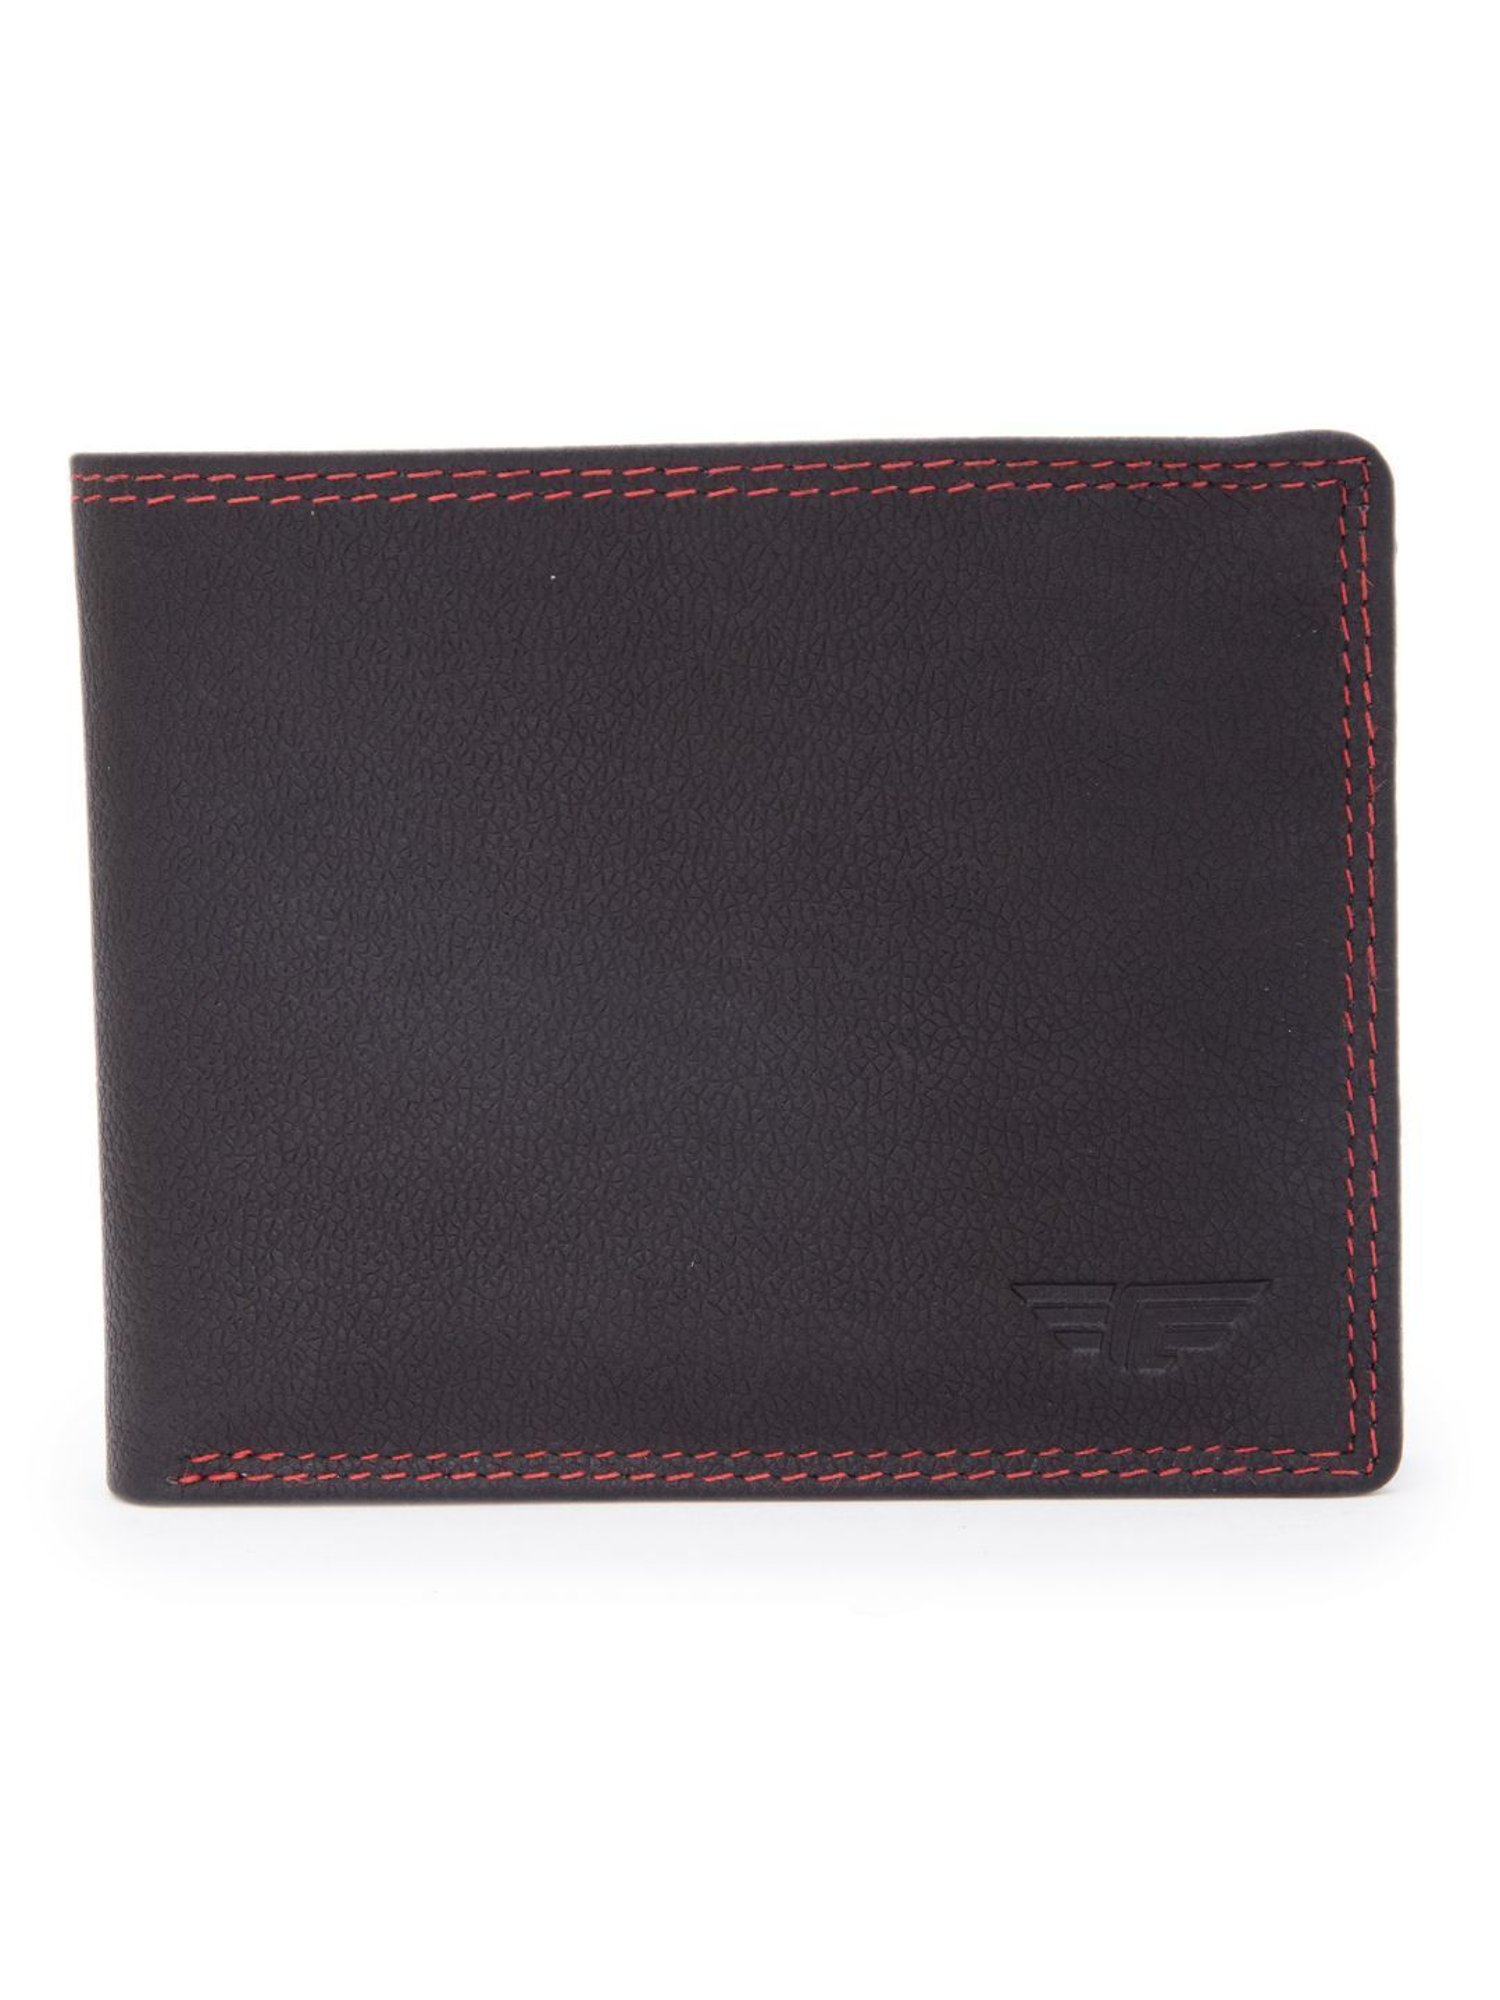 Mens Wallets Comme des Garcons, Style code: sa2100-rosso- | Wallet men,  Wallet, Comme des garcons